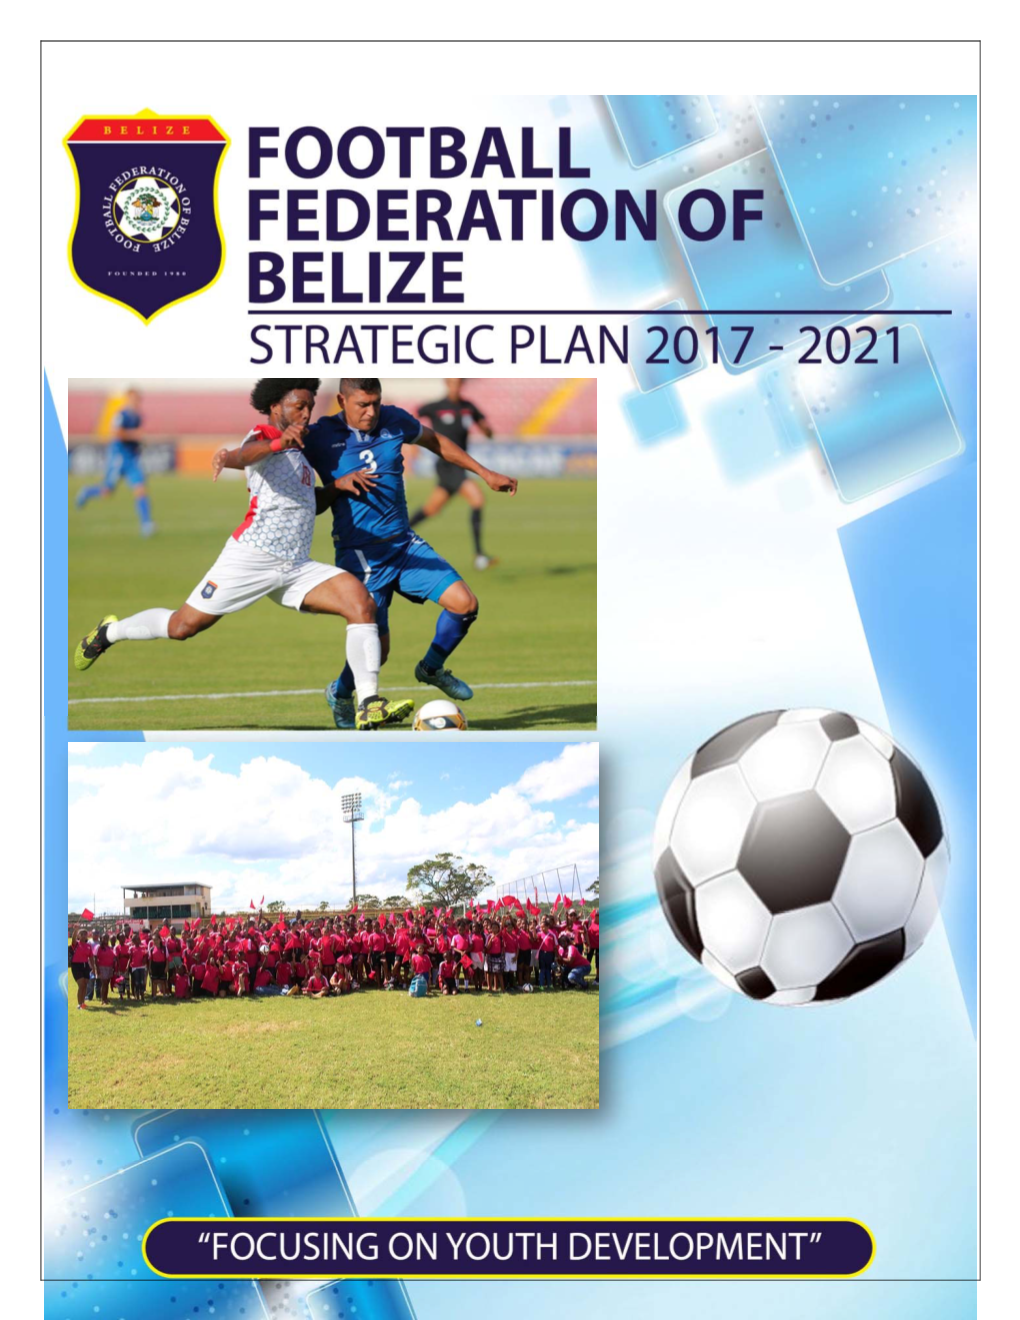 Strategic Plan Objectives